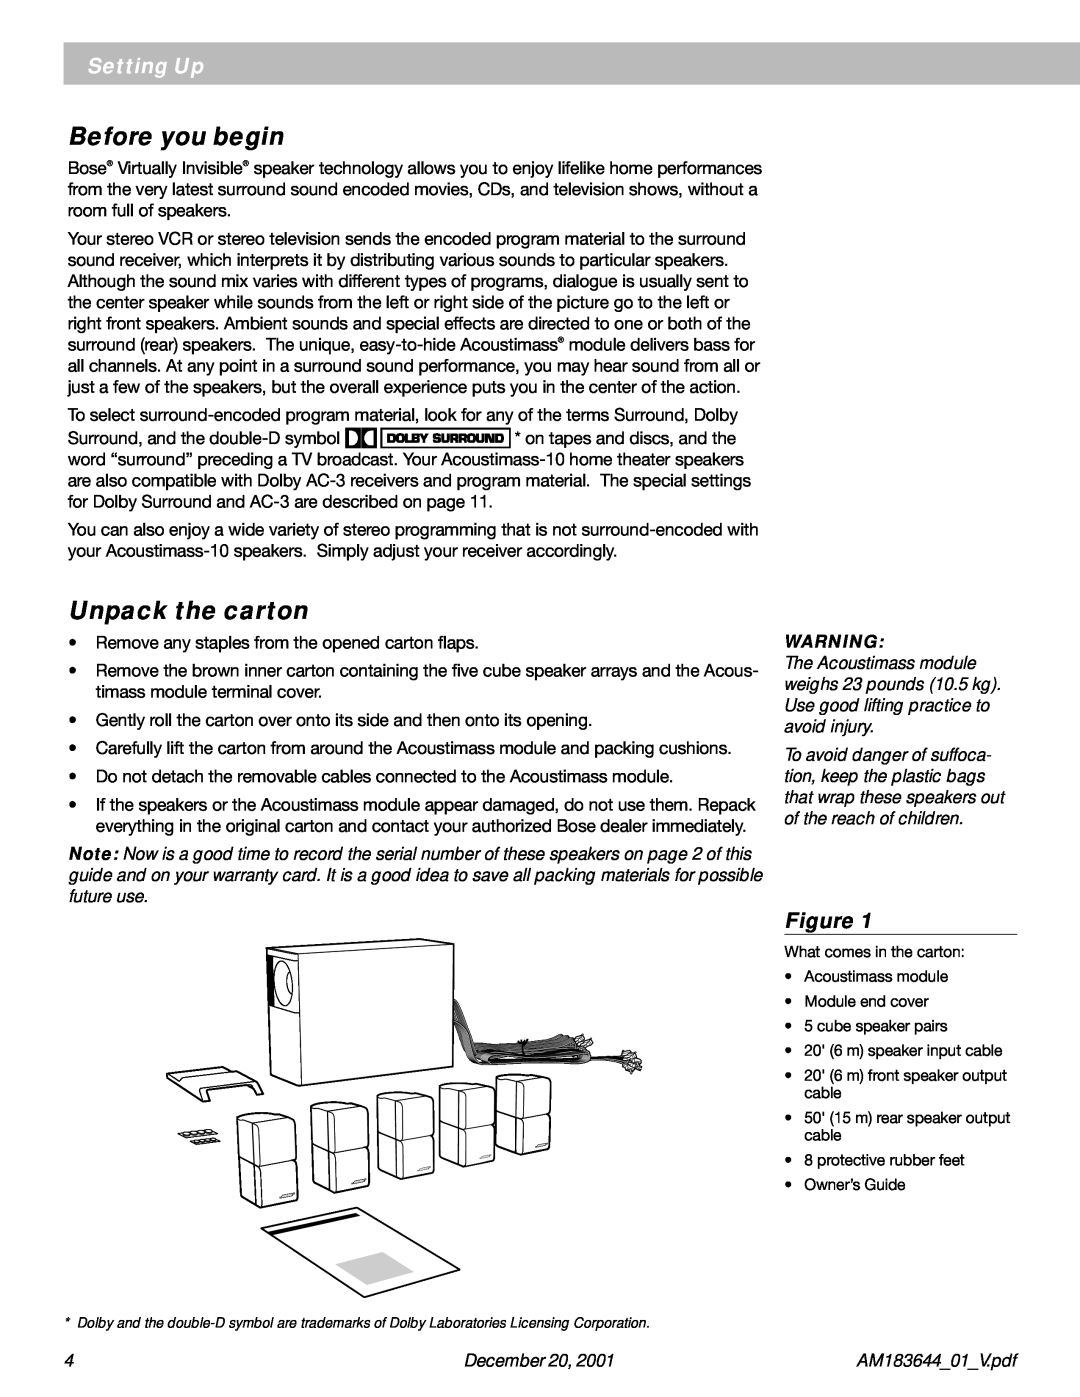 Bose Acoustimass - 10 manual Before you begin, Unpack the carton, Setting Up, December 